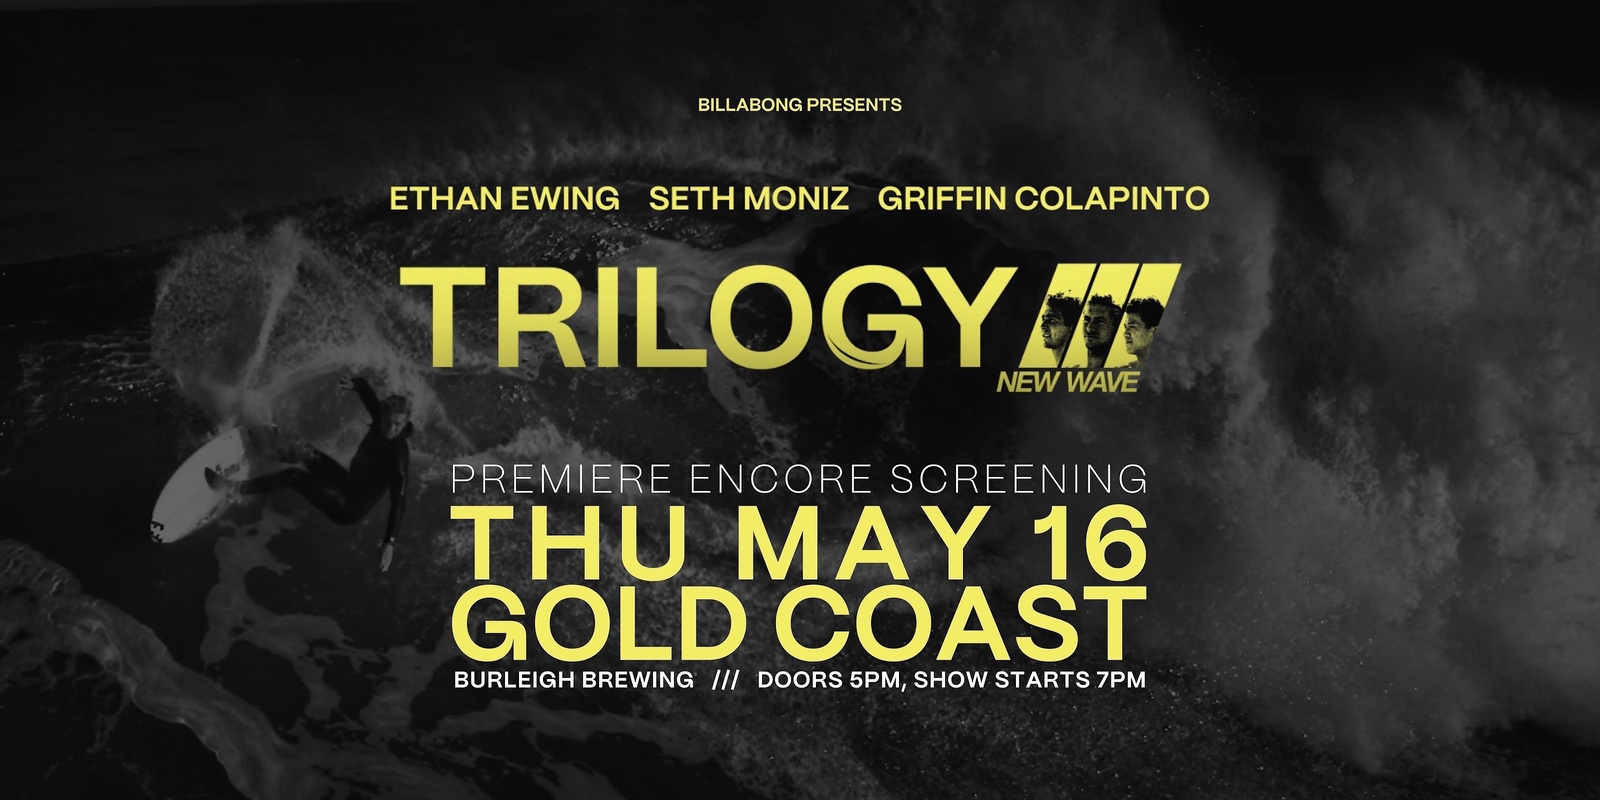 Banner image for Billabong presents Trilogy: New Wave - Gold Coast encore screening